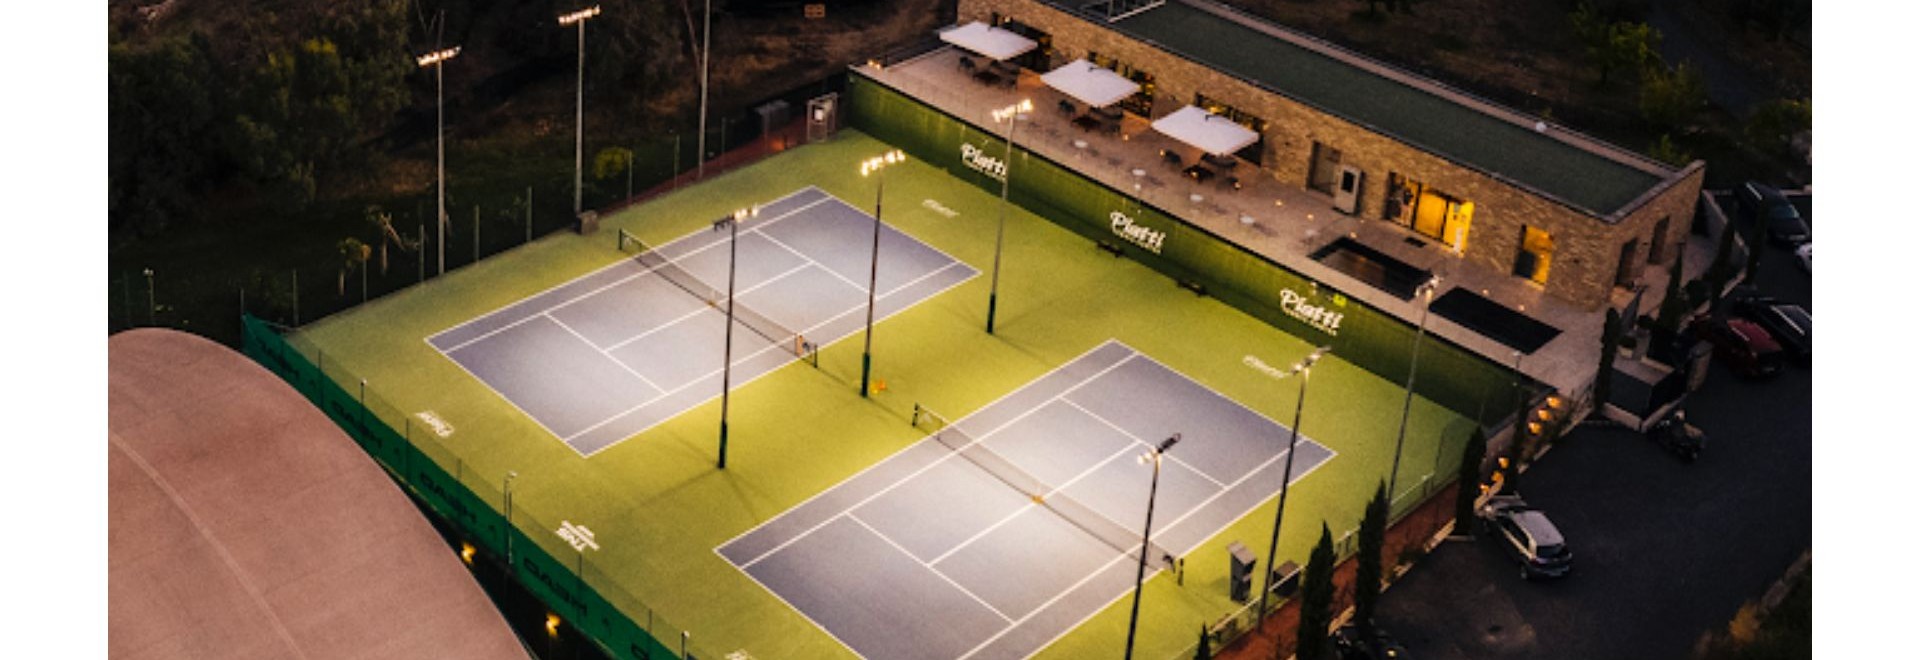 Piatti Tennis Center, Bordighera  - Book. Travel. Play.